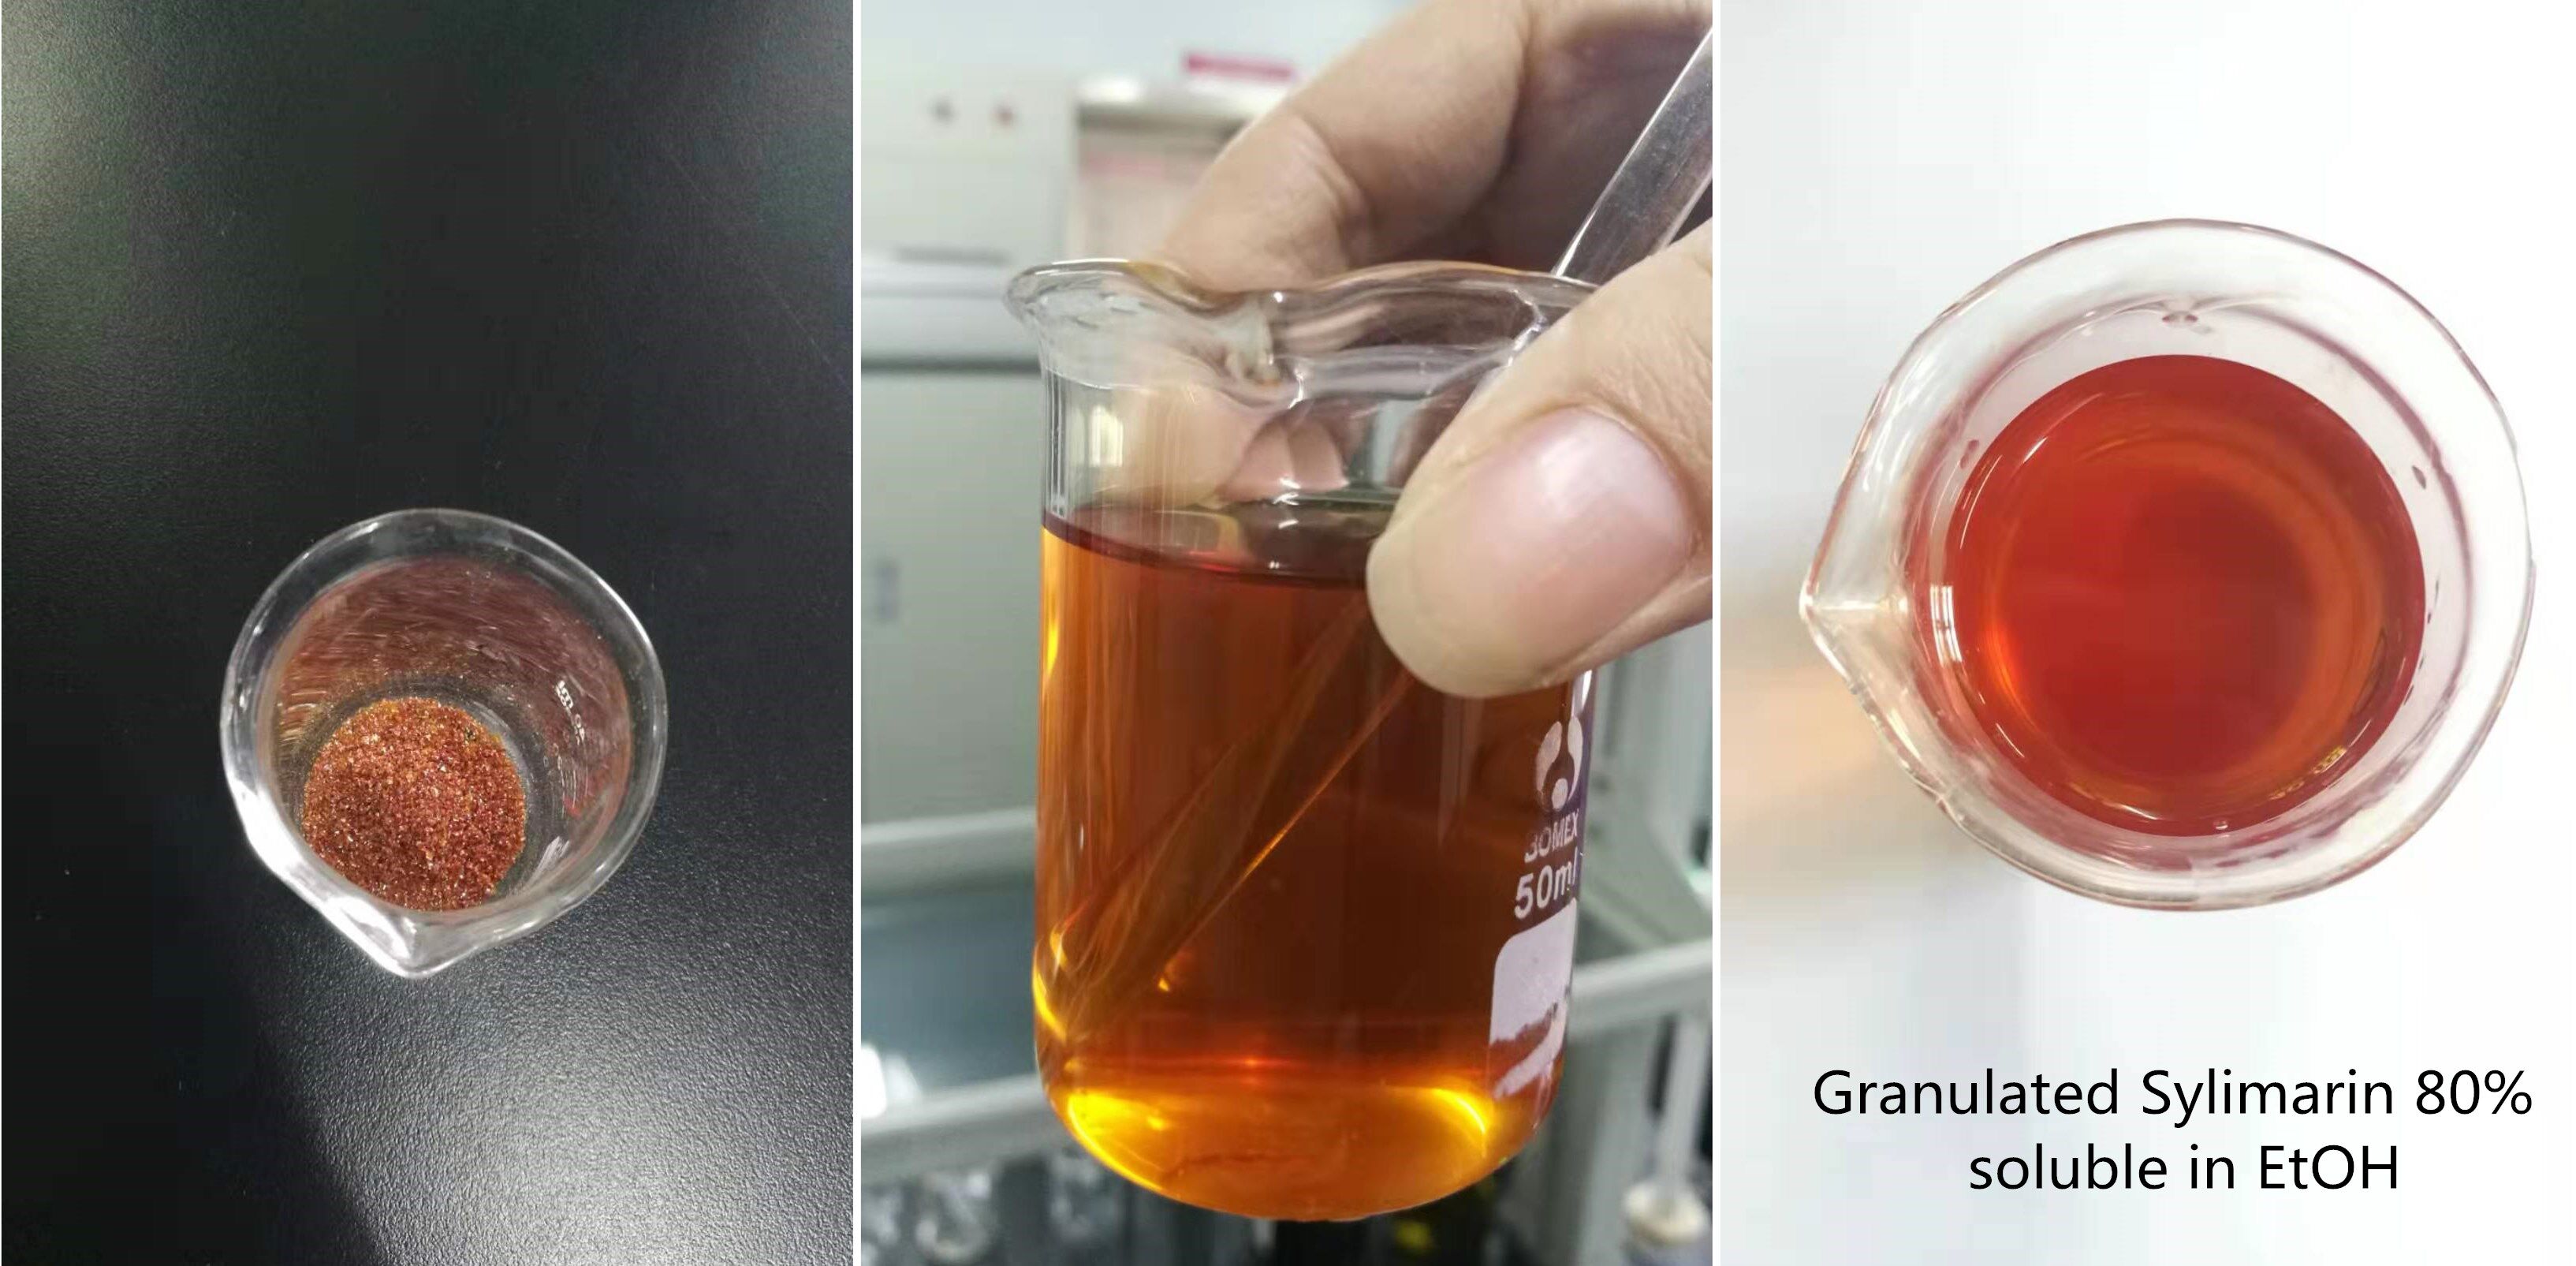 Granulated Silymarin soluble in Ethanol